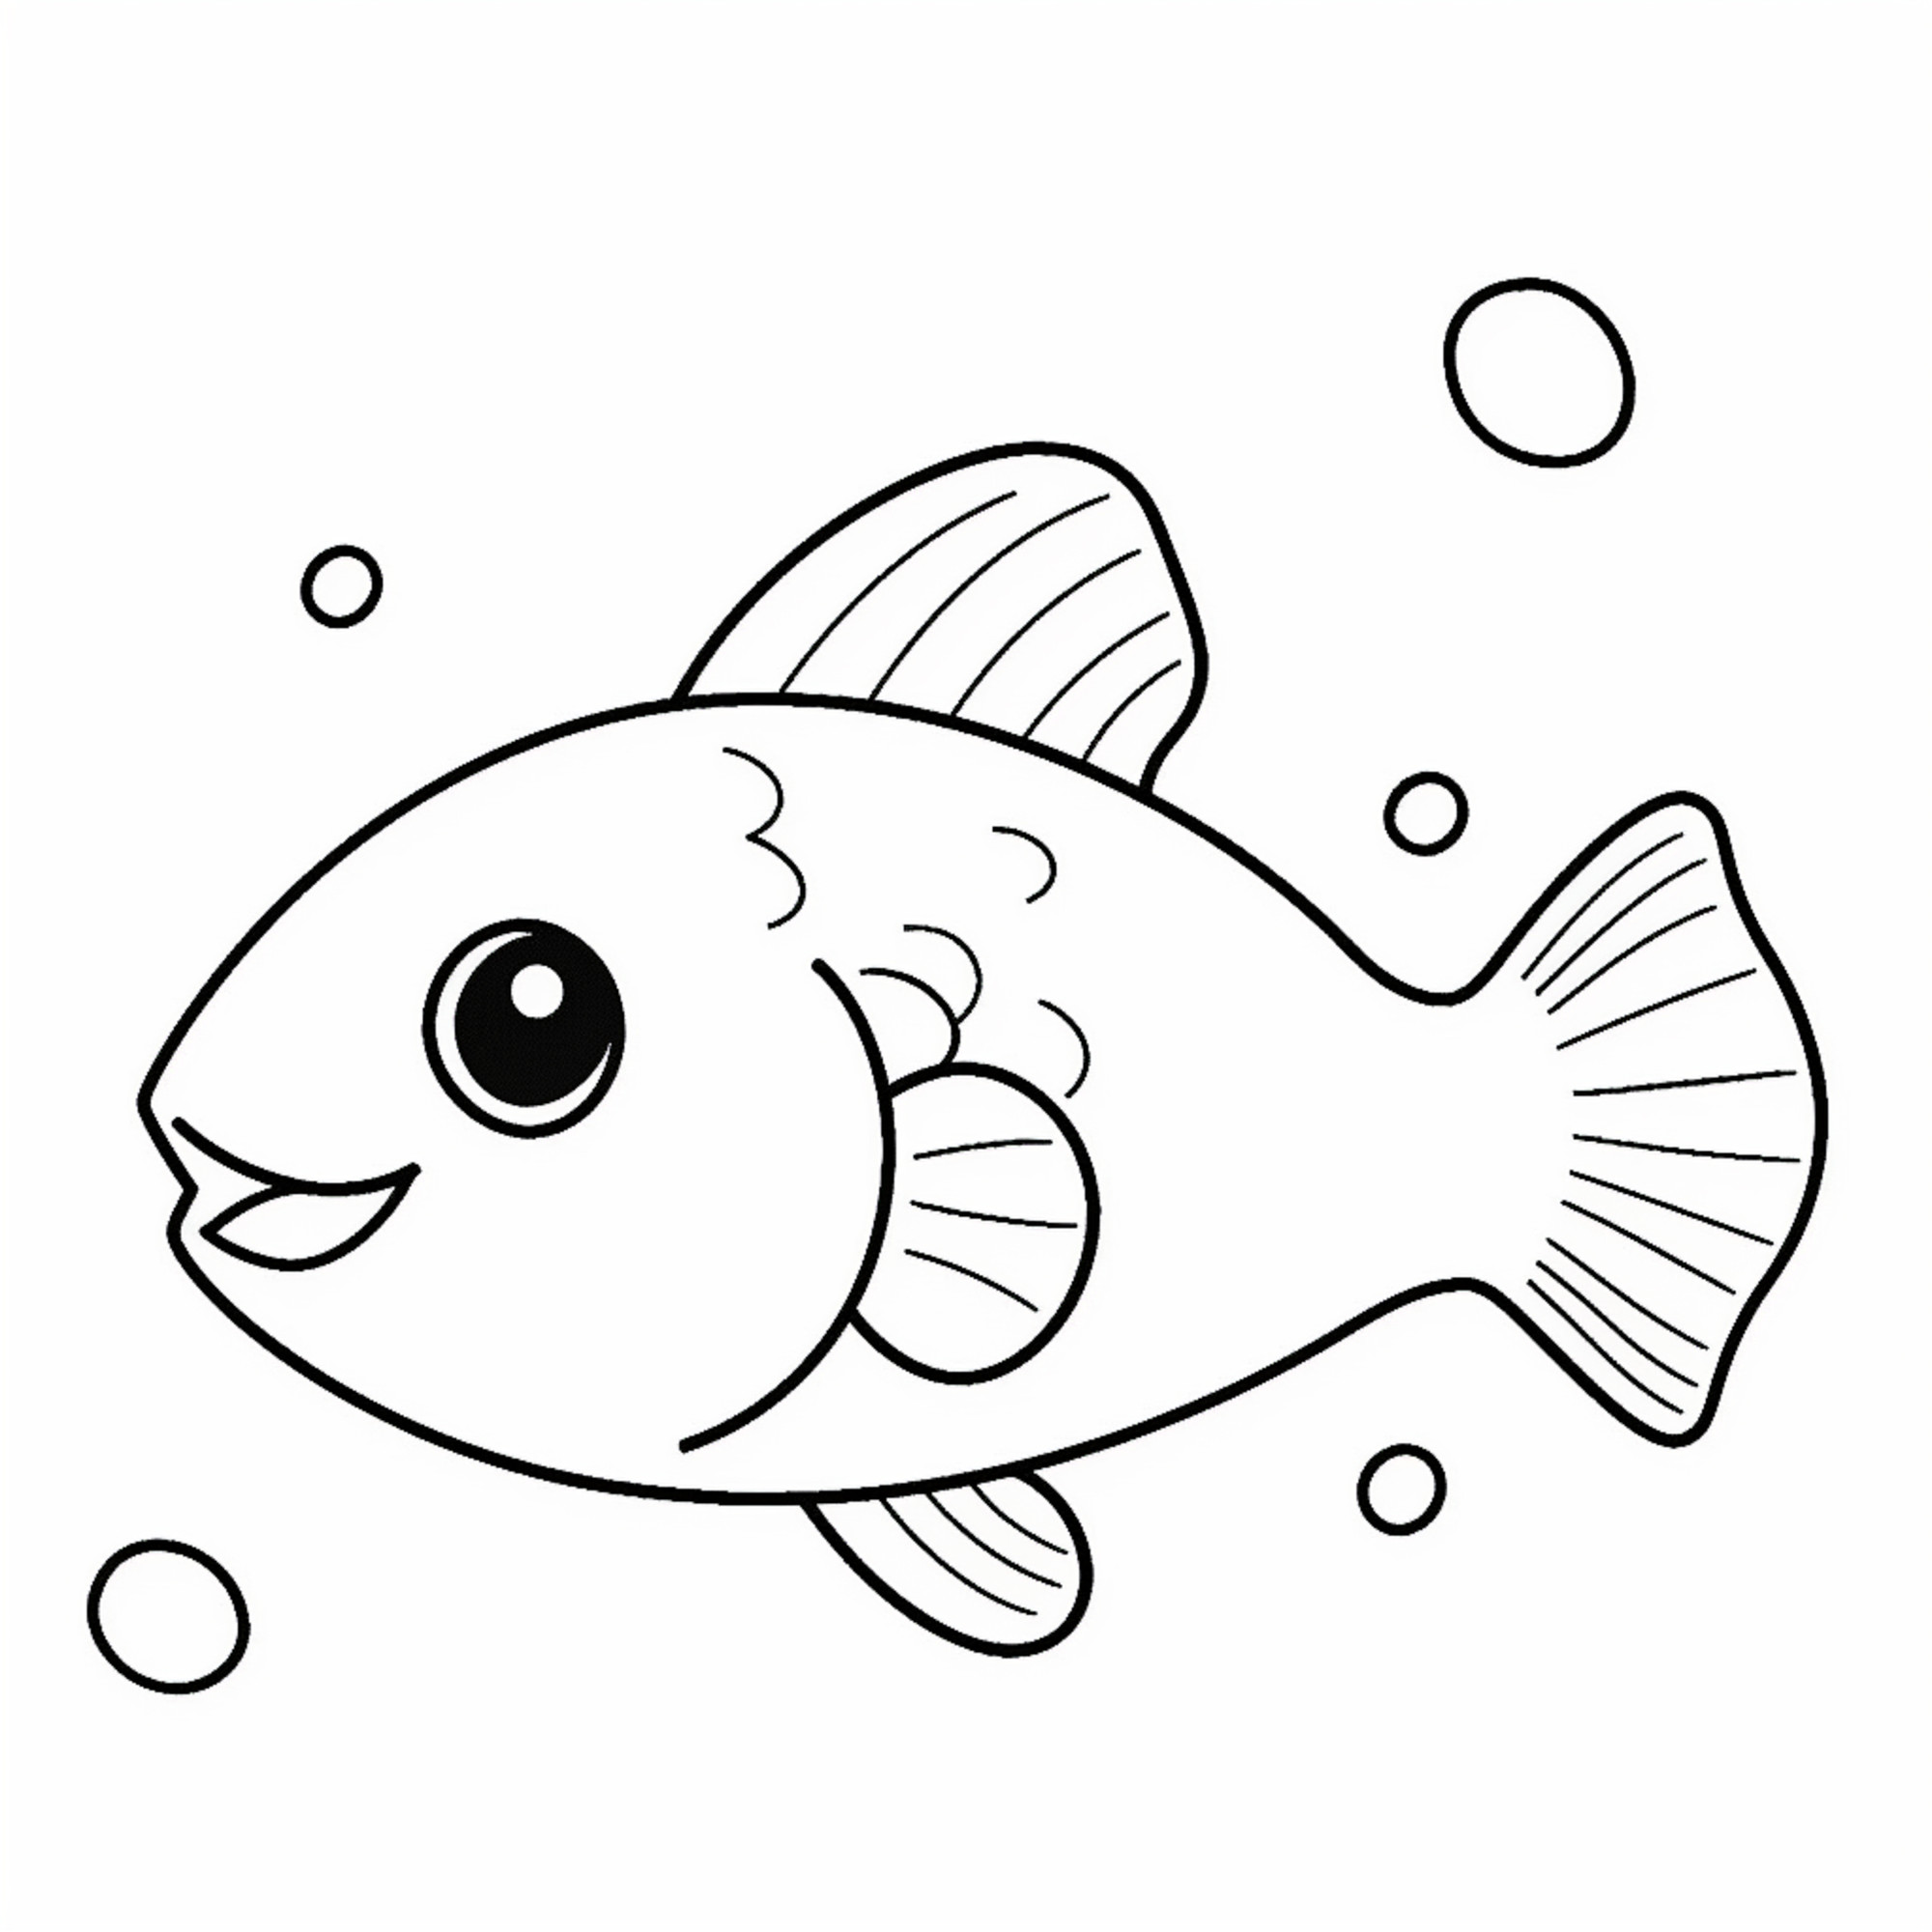 Раскраска для детей: веселая мультяшная рыба